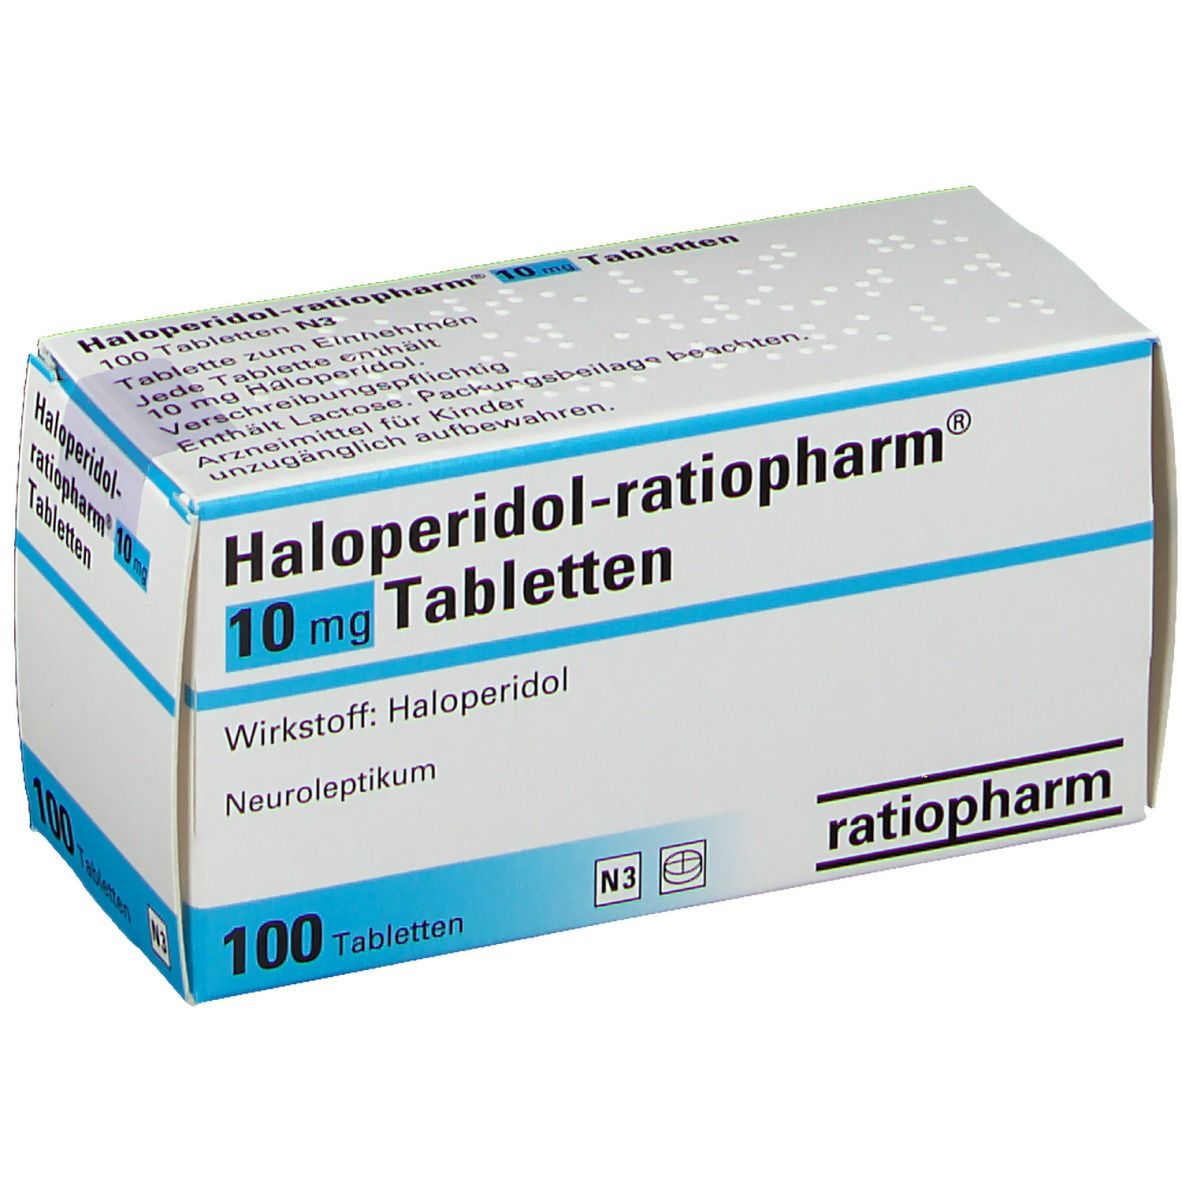 Haloperidol-ratiopharm® 10 mg